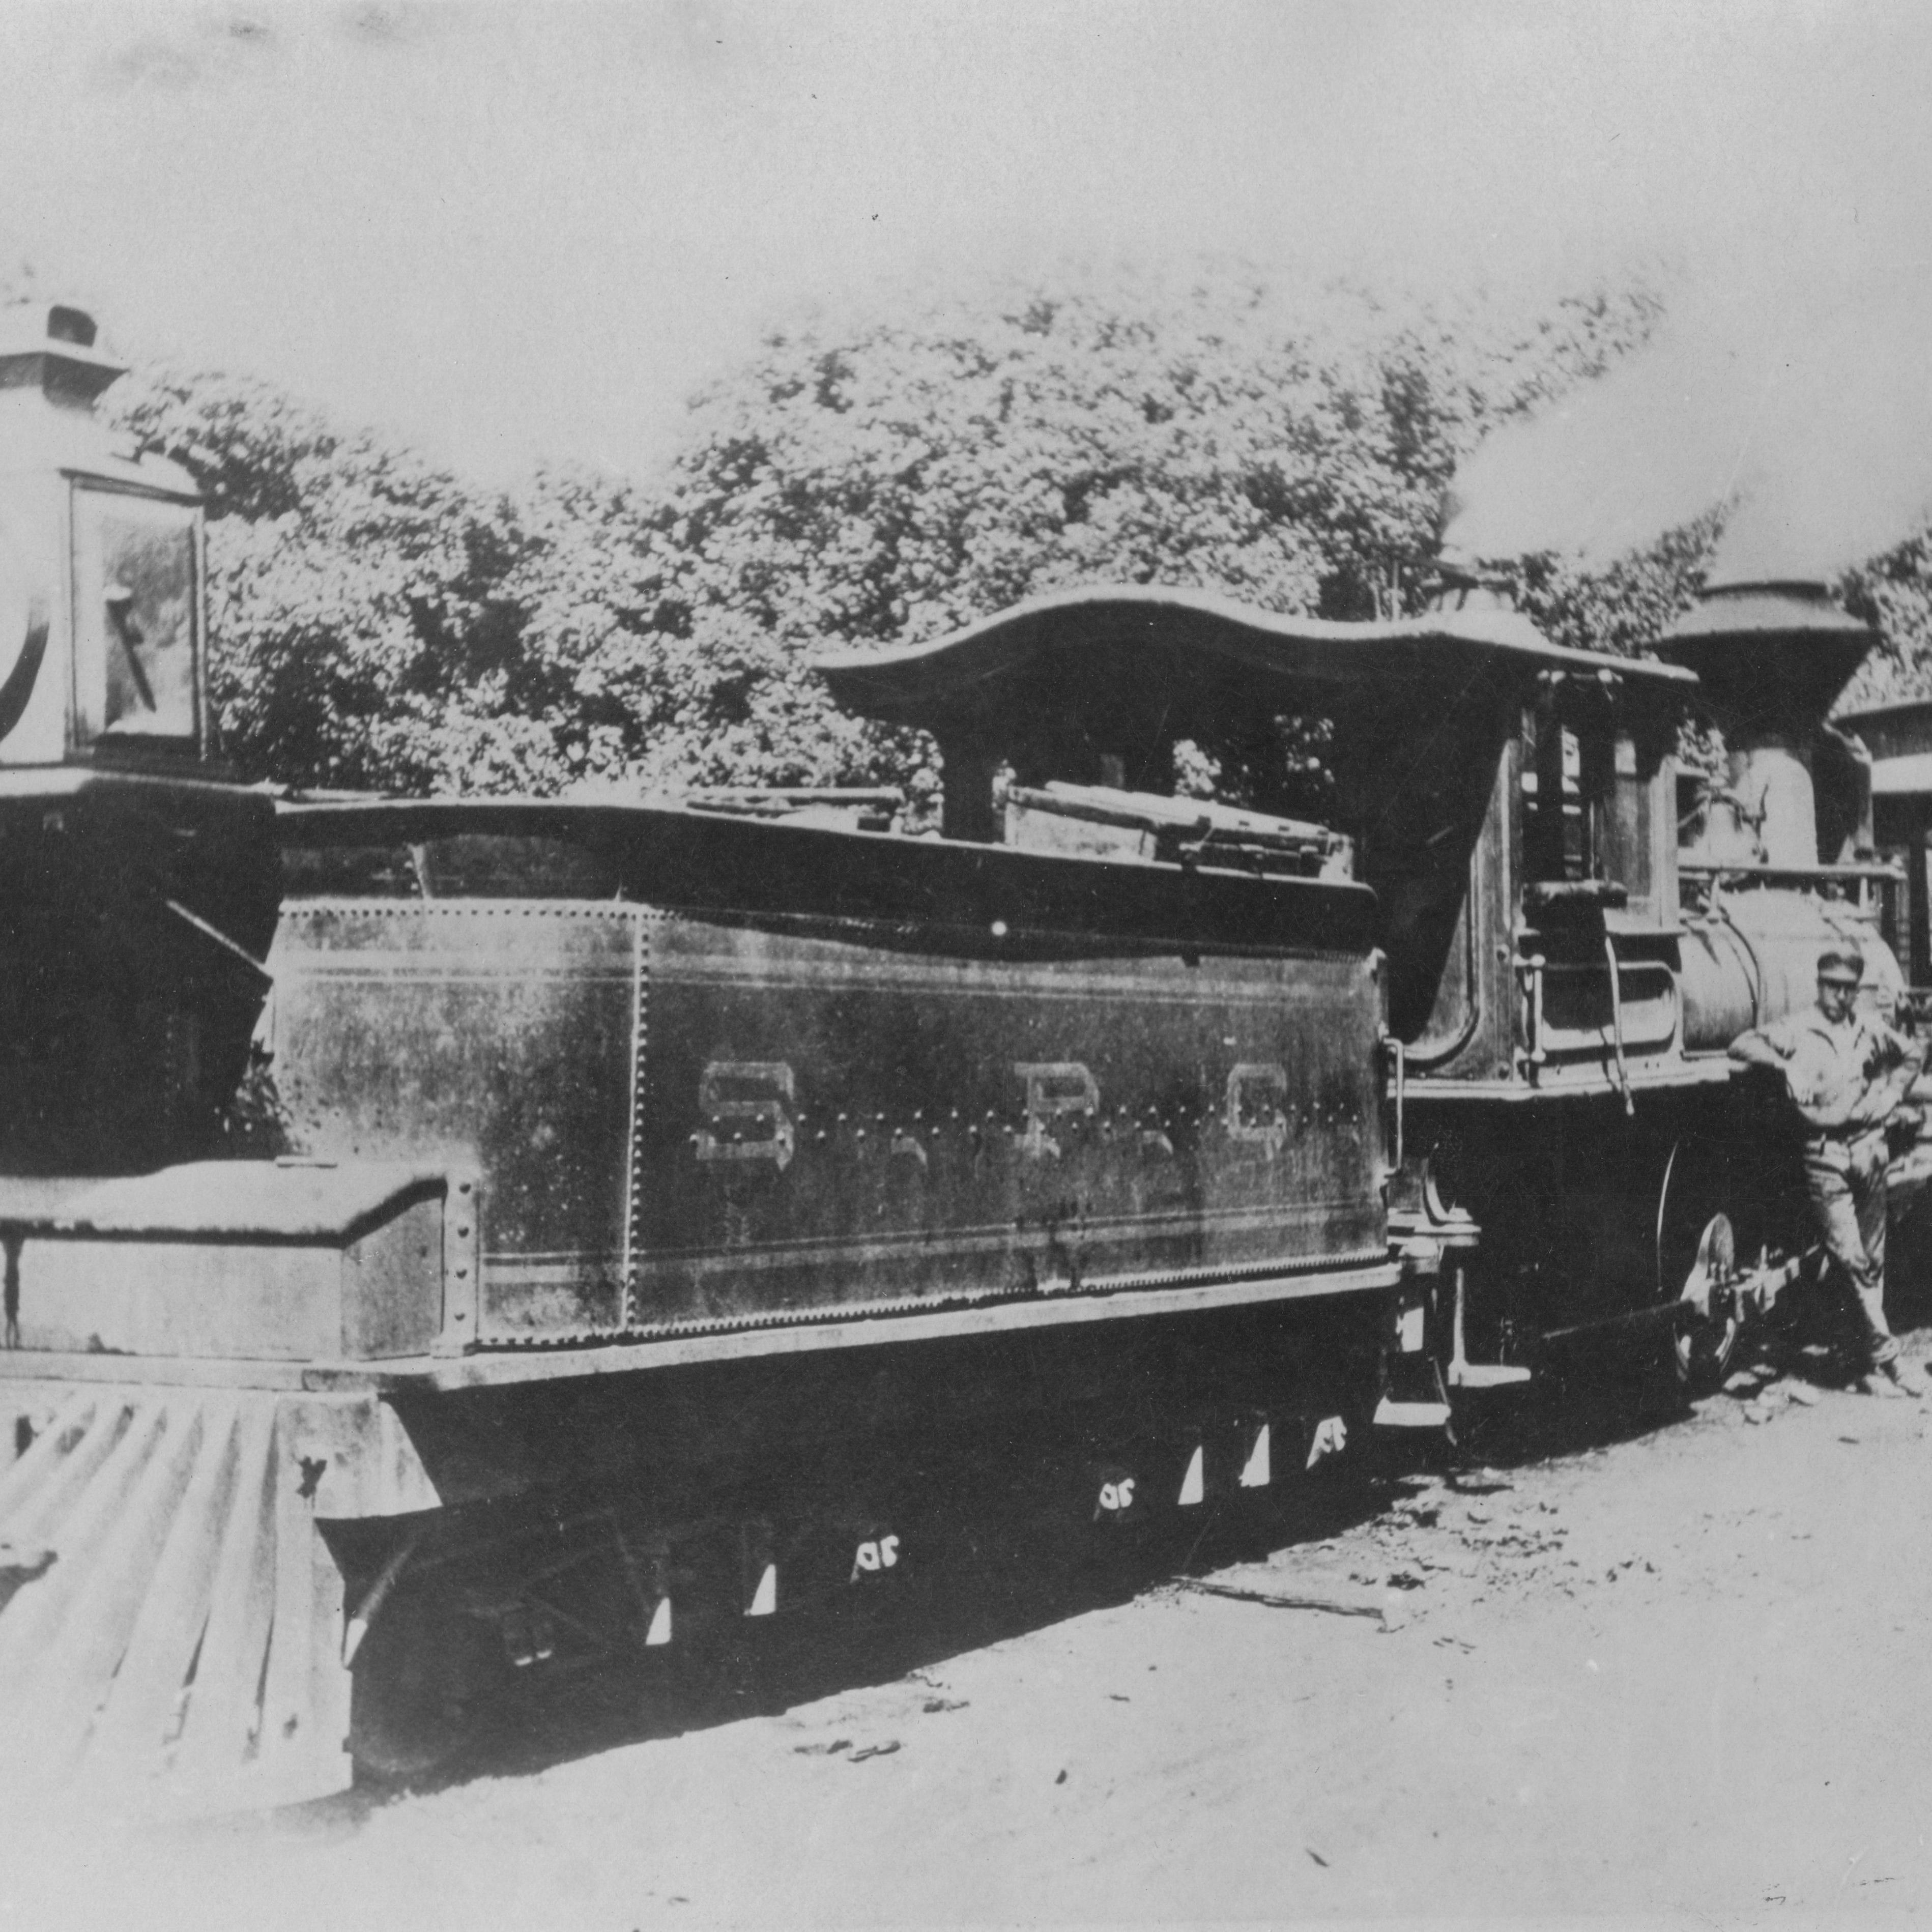 Locomotive No. 1 on the Telegraph Avenue Line